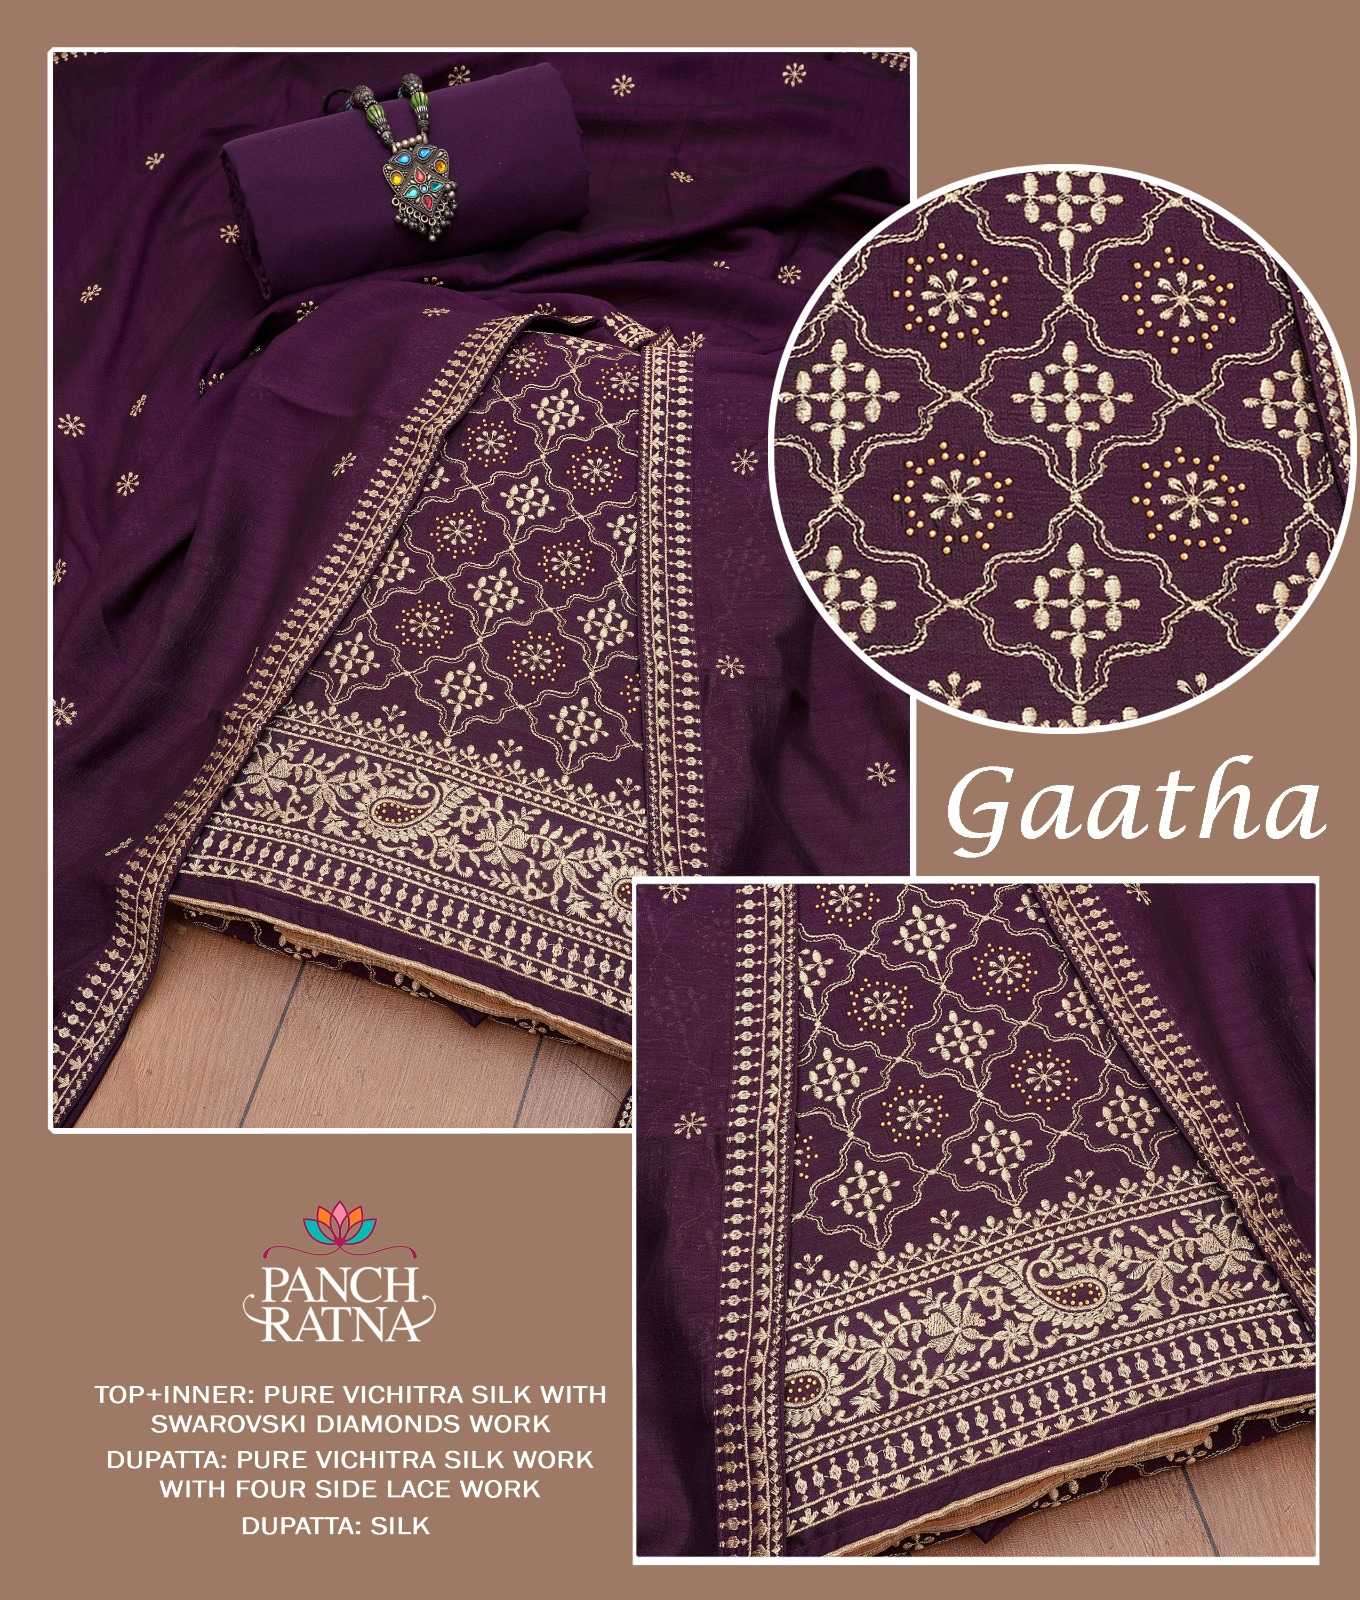 panch ratna gaatha vichitra silk with diamond work suit